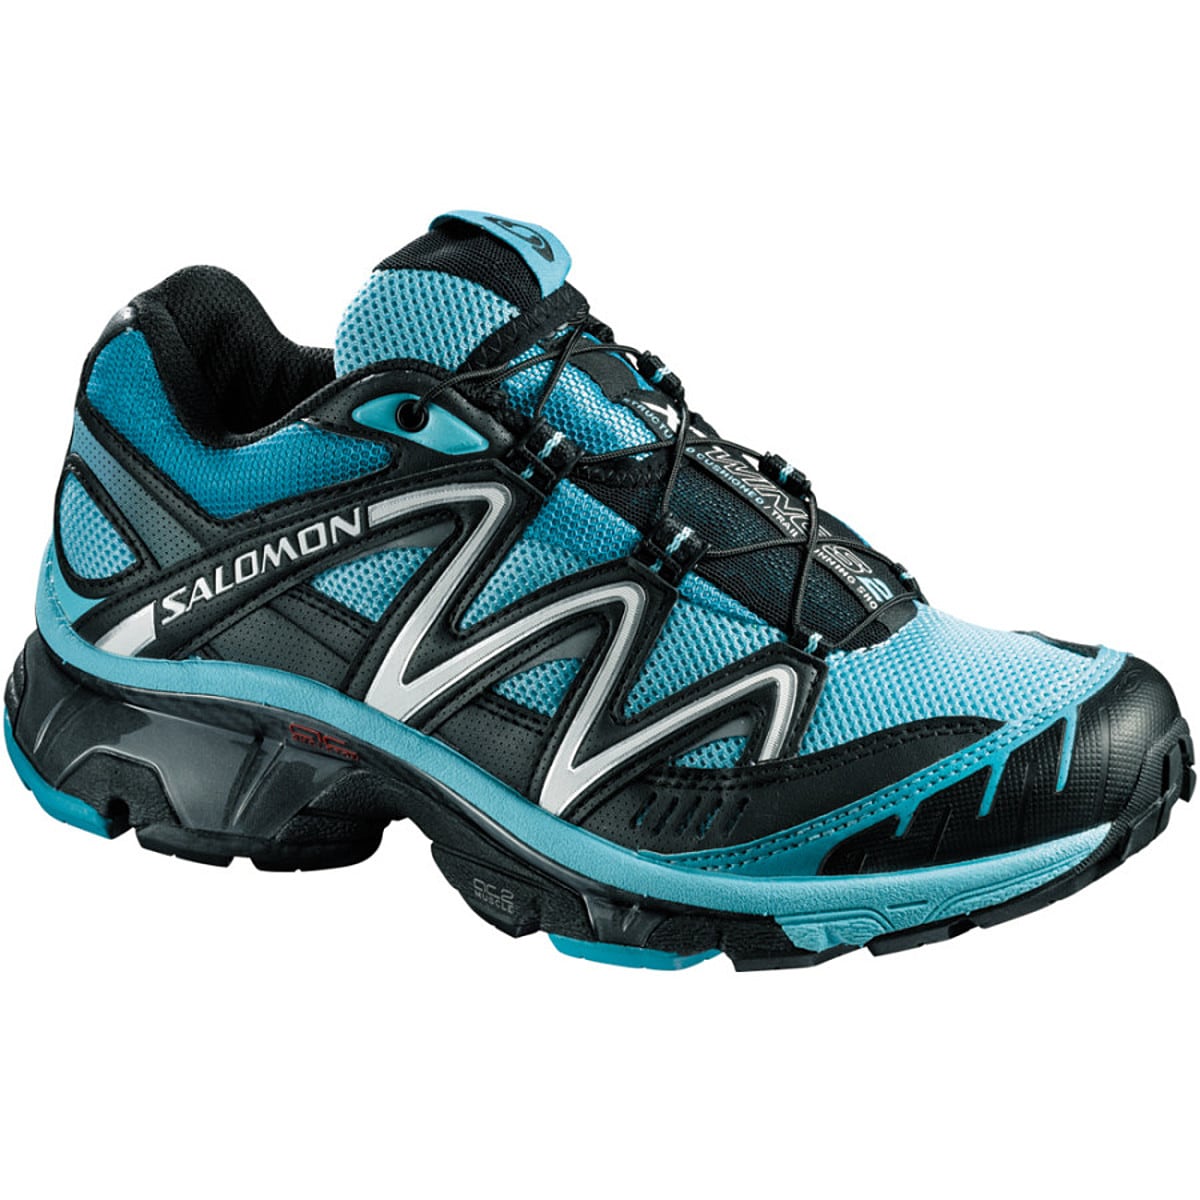 Belastingen retort Uitbreiden Salomon XT Wings 2 Trail Running Shoe - Women's - Footwear